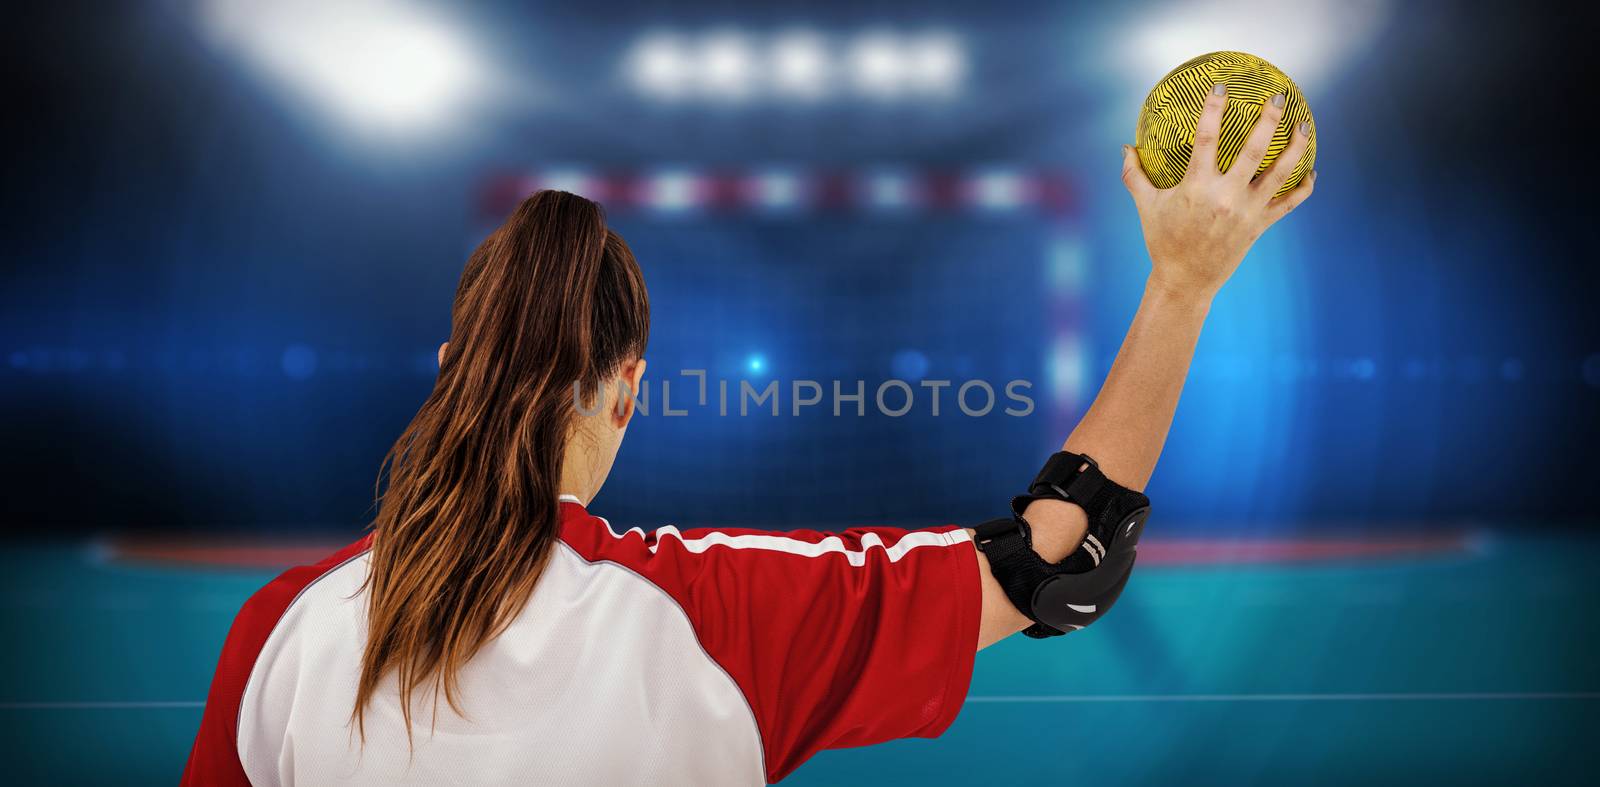 Sportswoman holding a ball against handball field indoor 